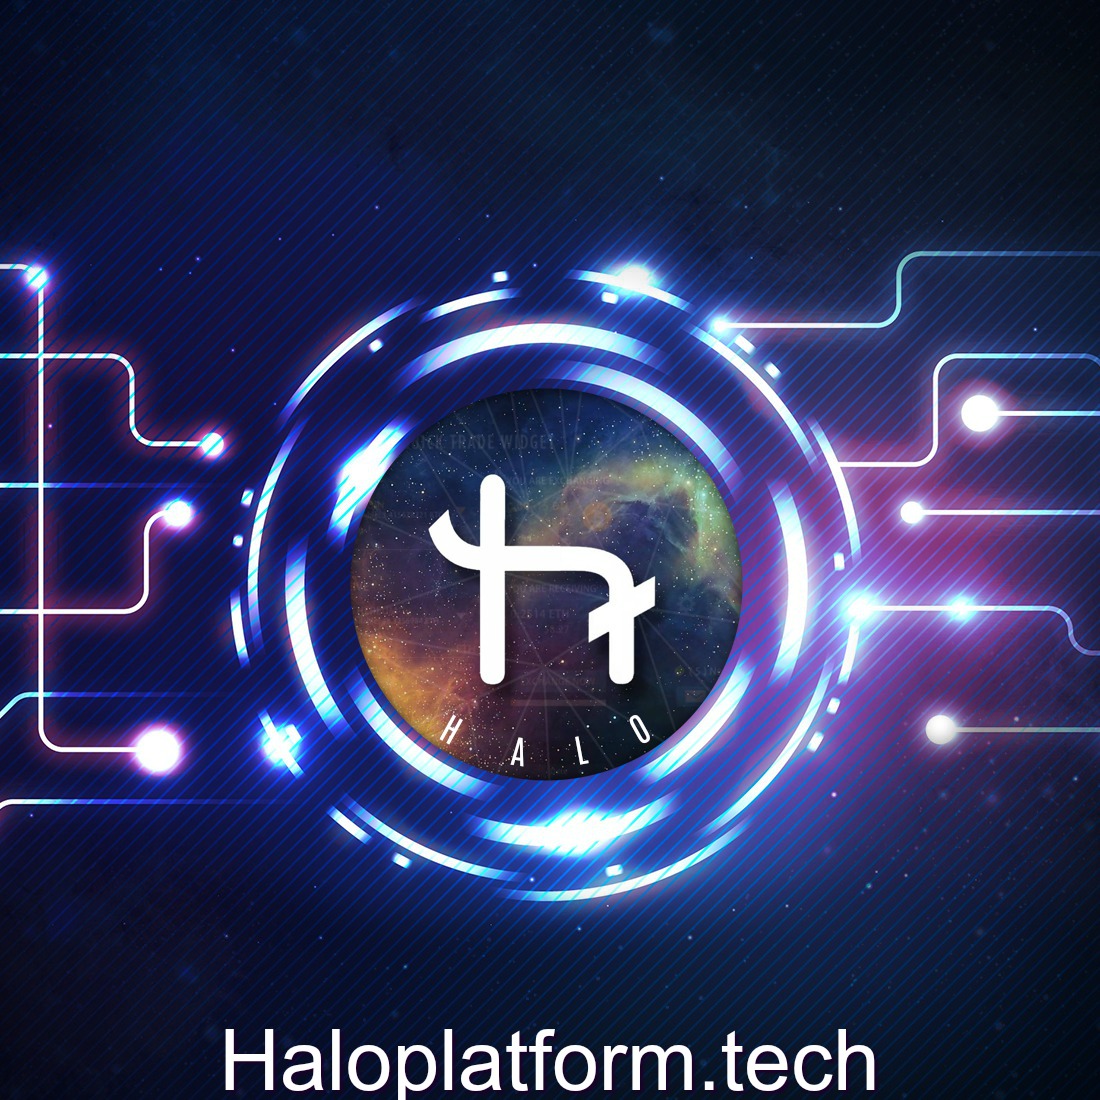 halo-platform-crypto-currency-image002.jpg